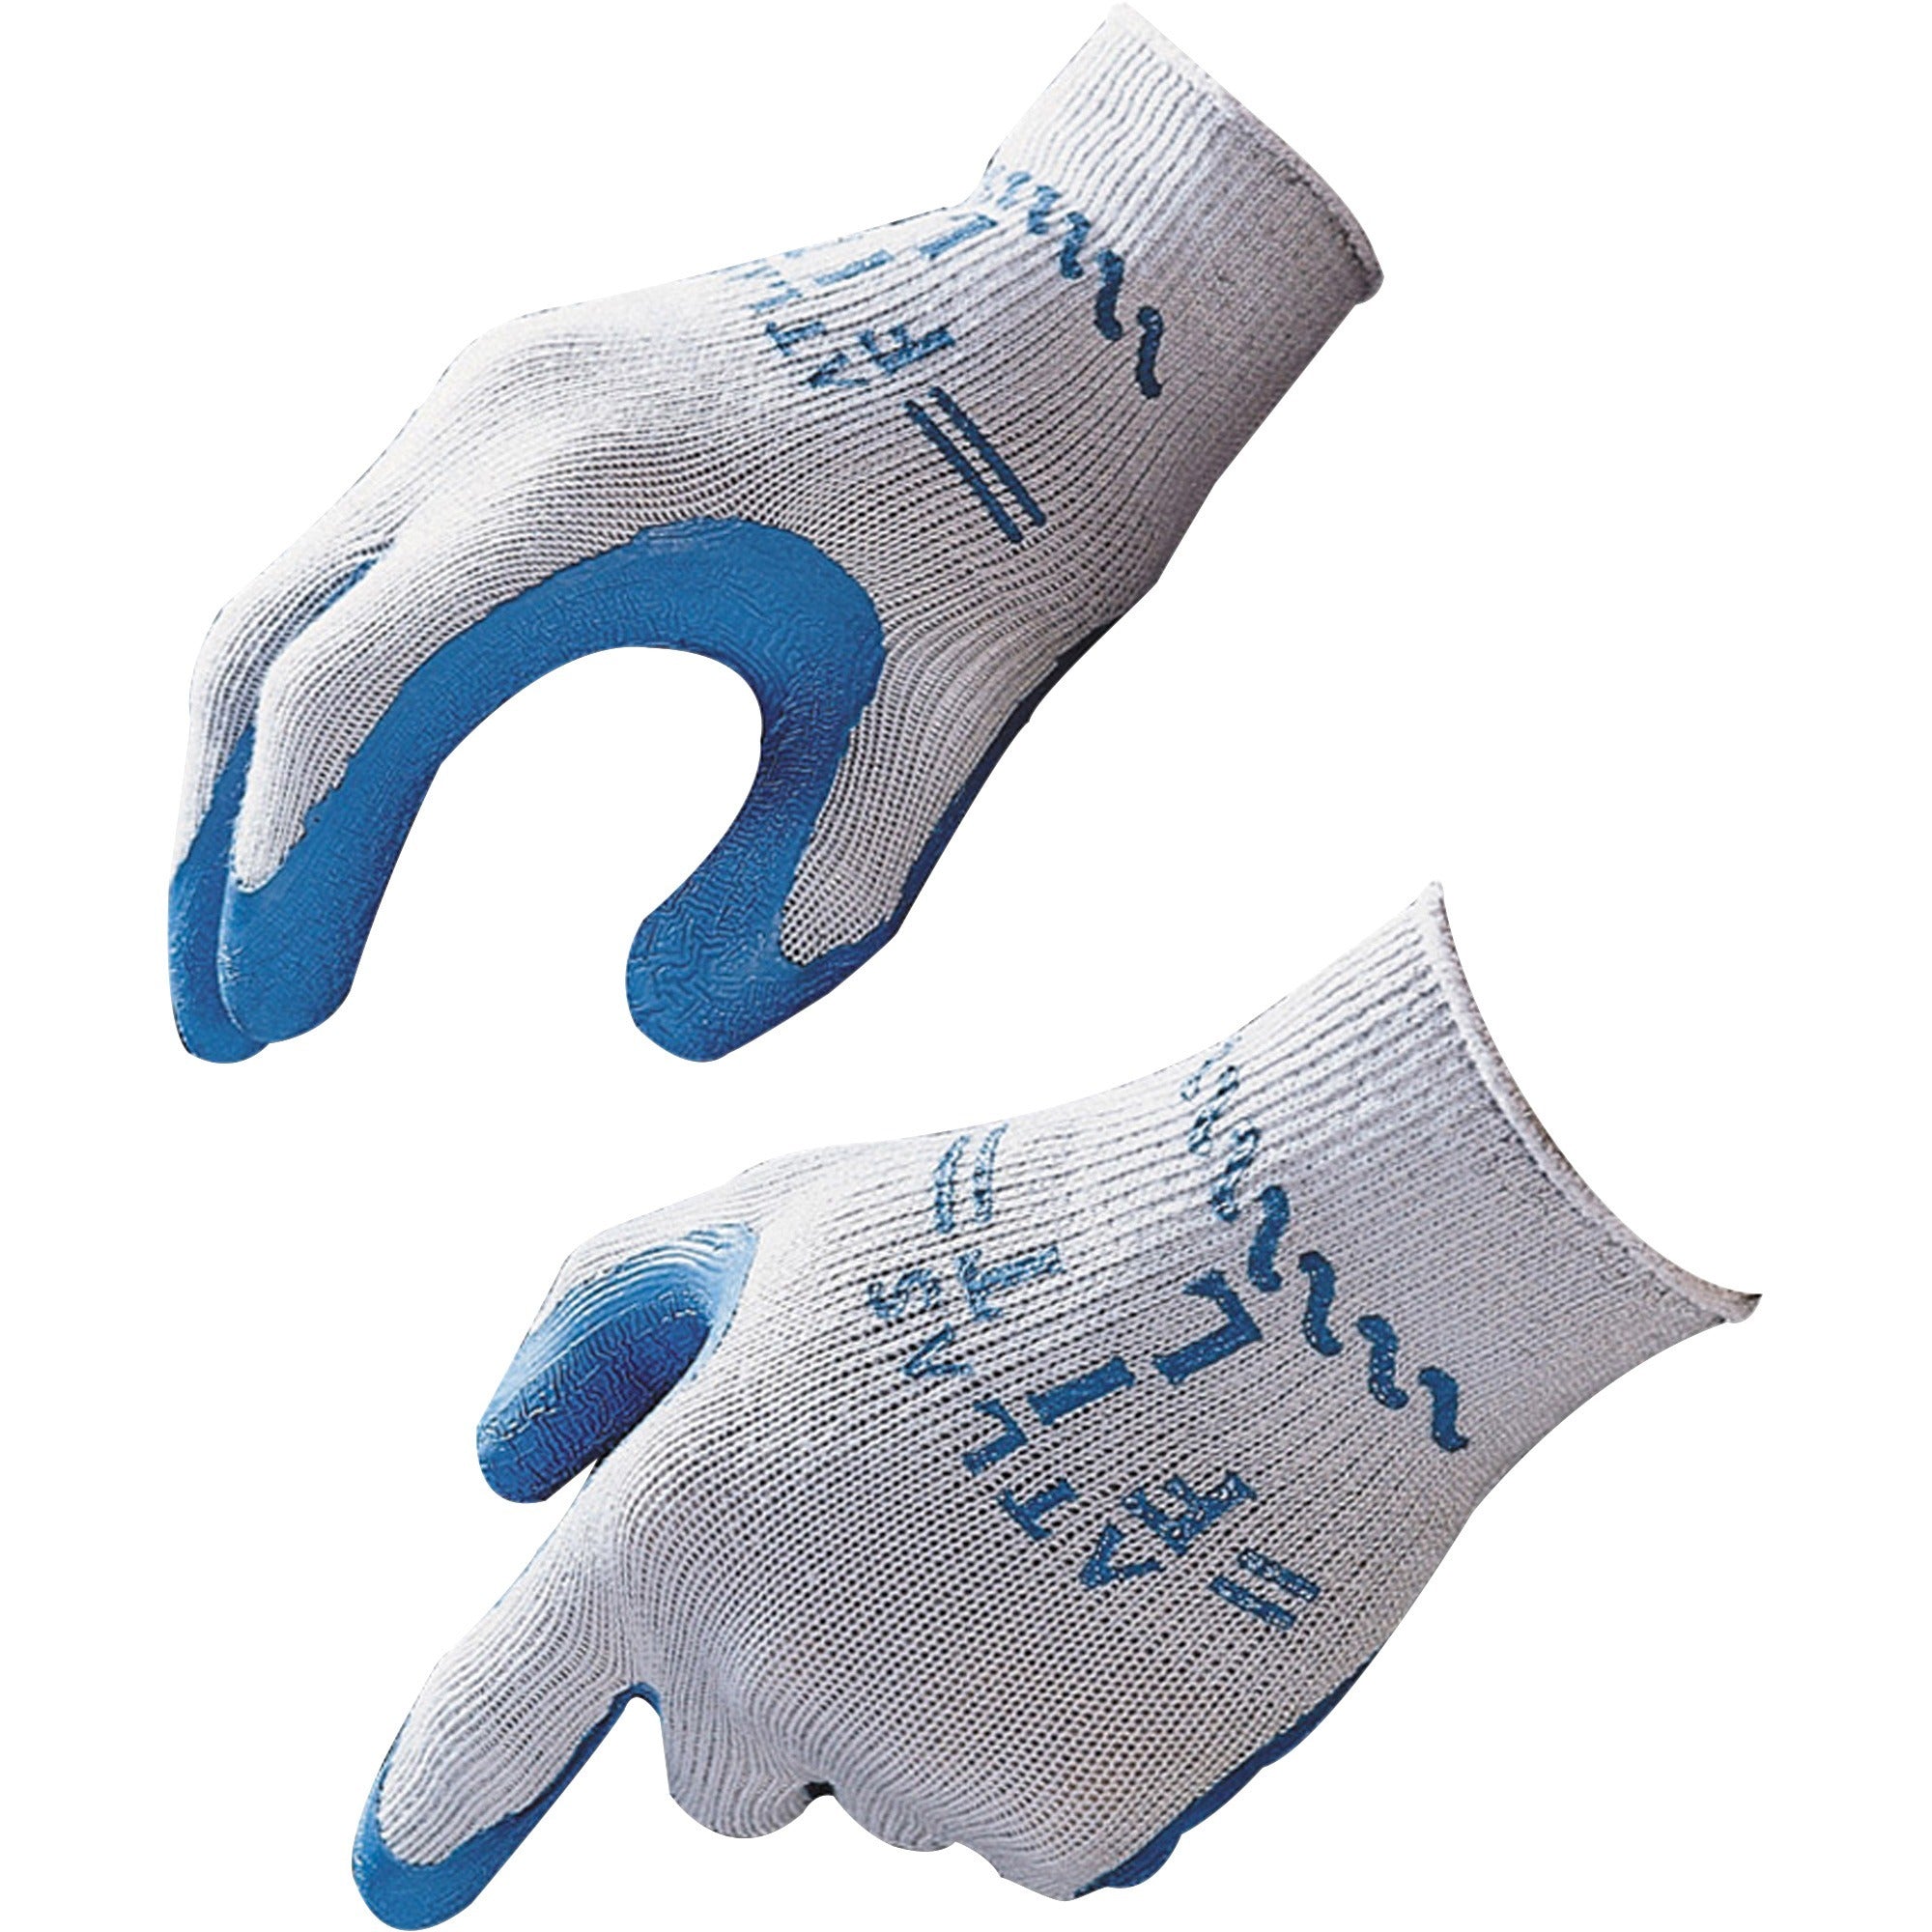 Showa Atlas Fit General Purpose Gloves - Large Size - Blue, Gray - Lightweight, Elastic Wrist - 24 / Box - 